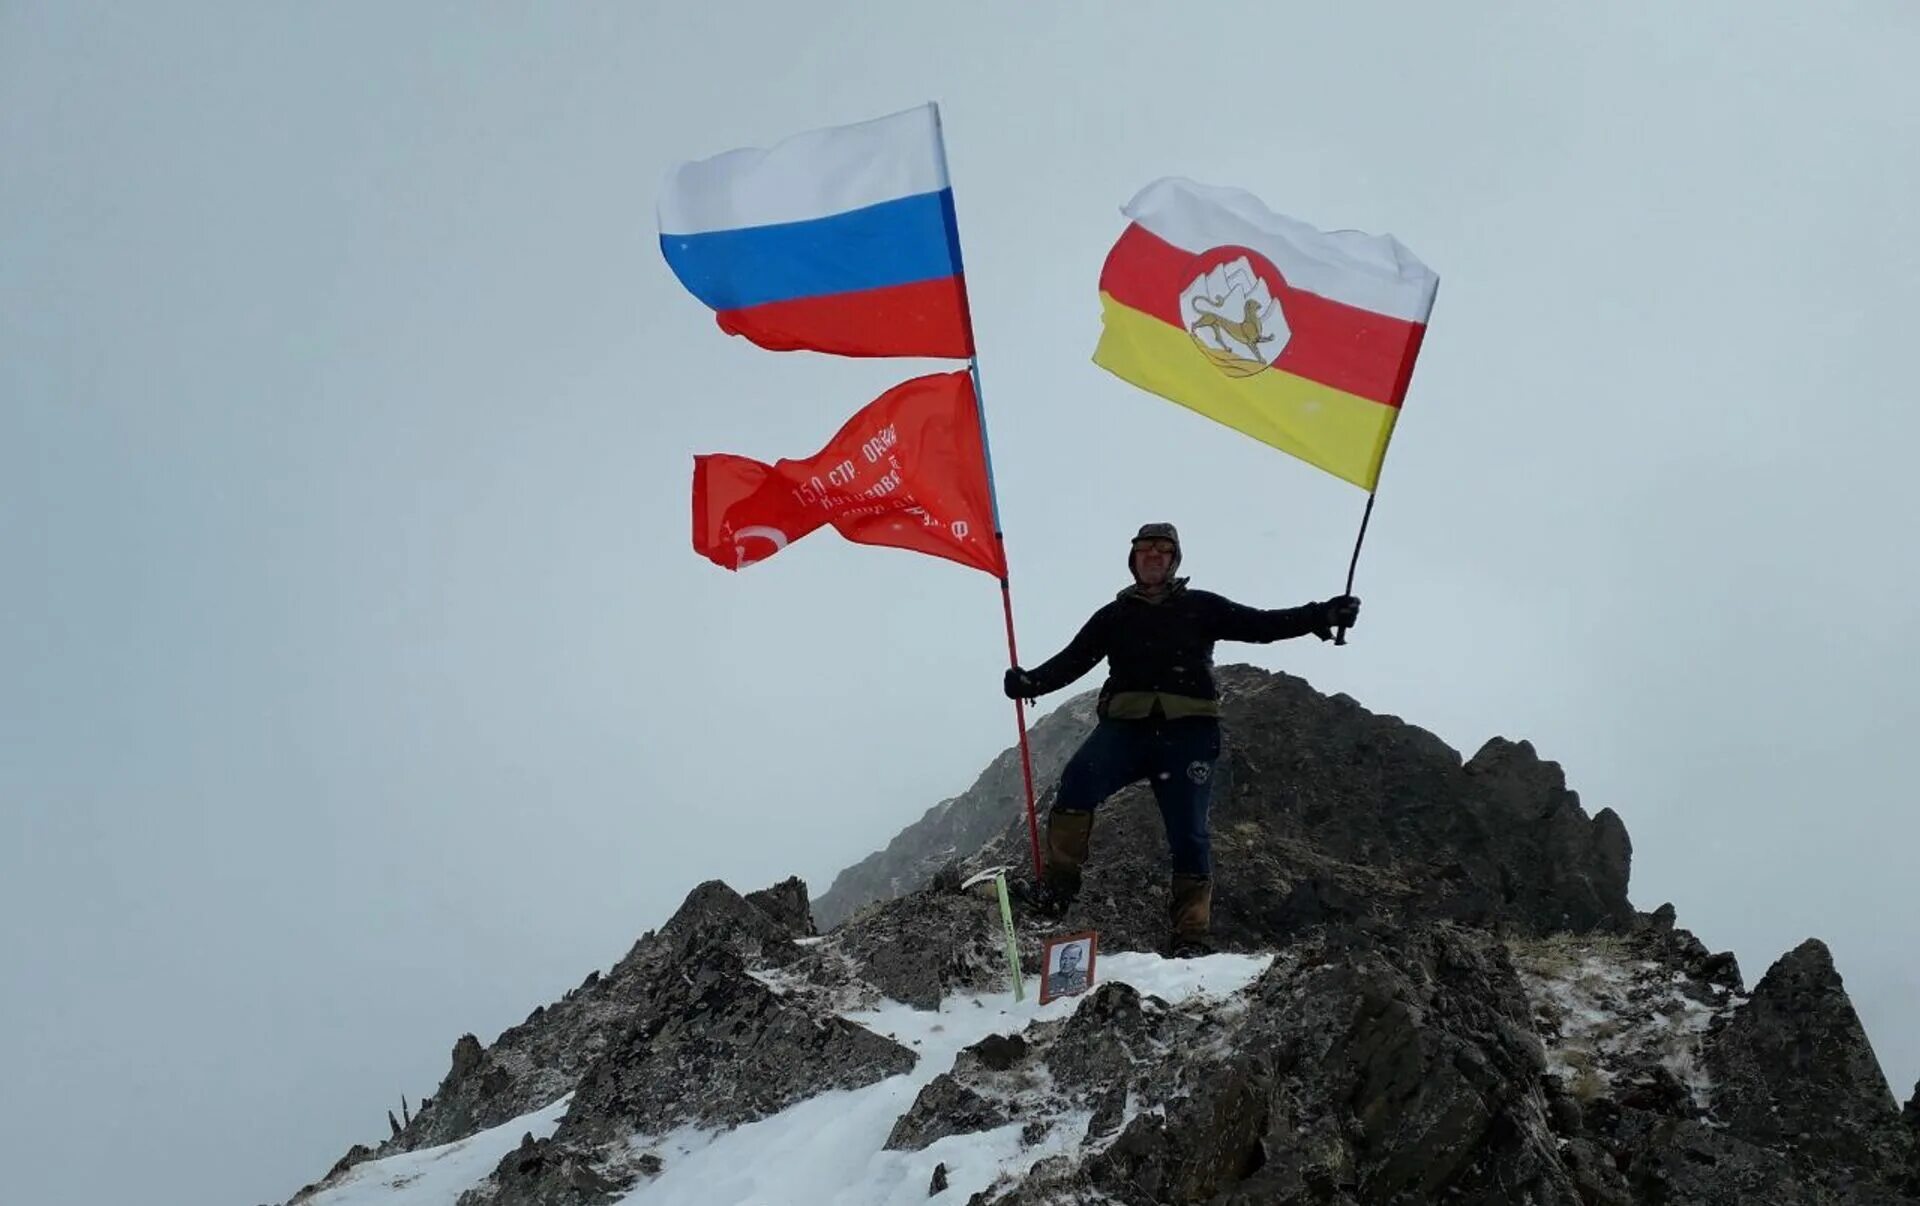 Сердце осетии. Флаг Северной Осетии. Флаг Алании Осетии. Флаг РСО-Алания и Южной Осетии. Флаг флаг Осетии.